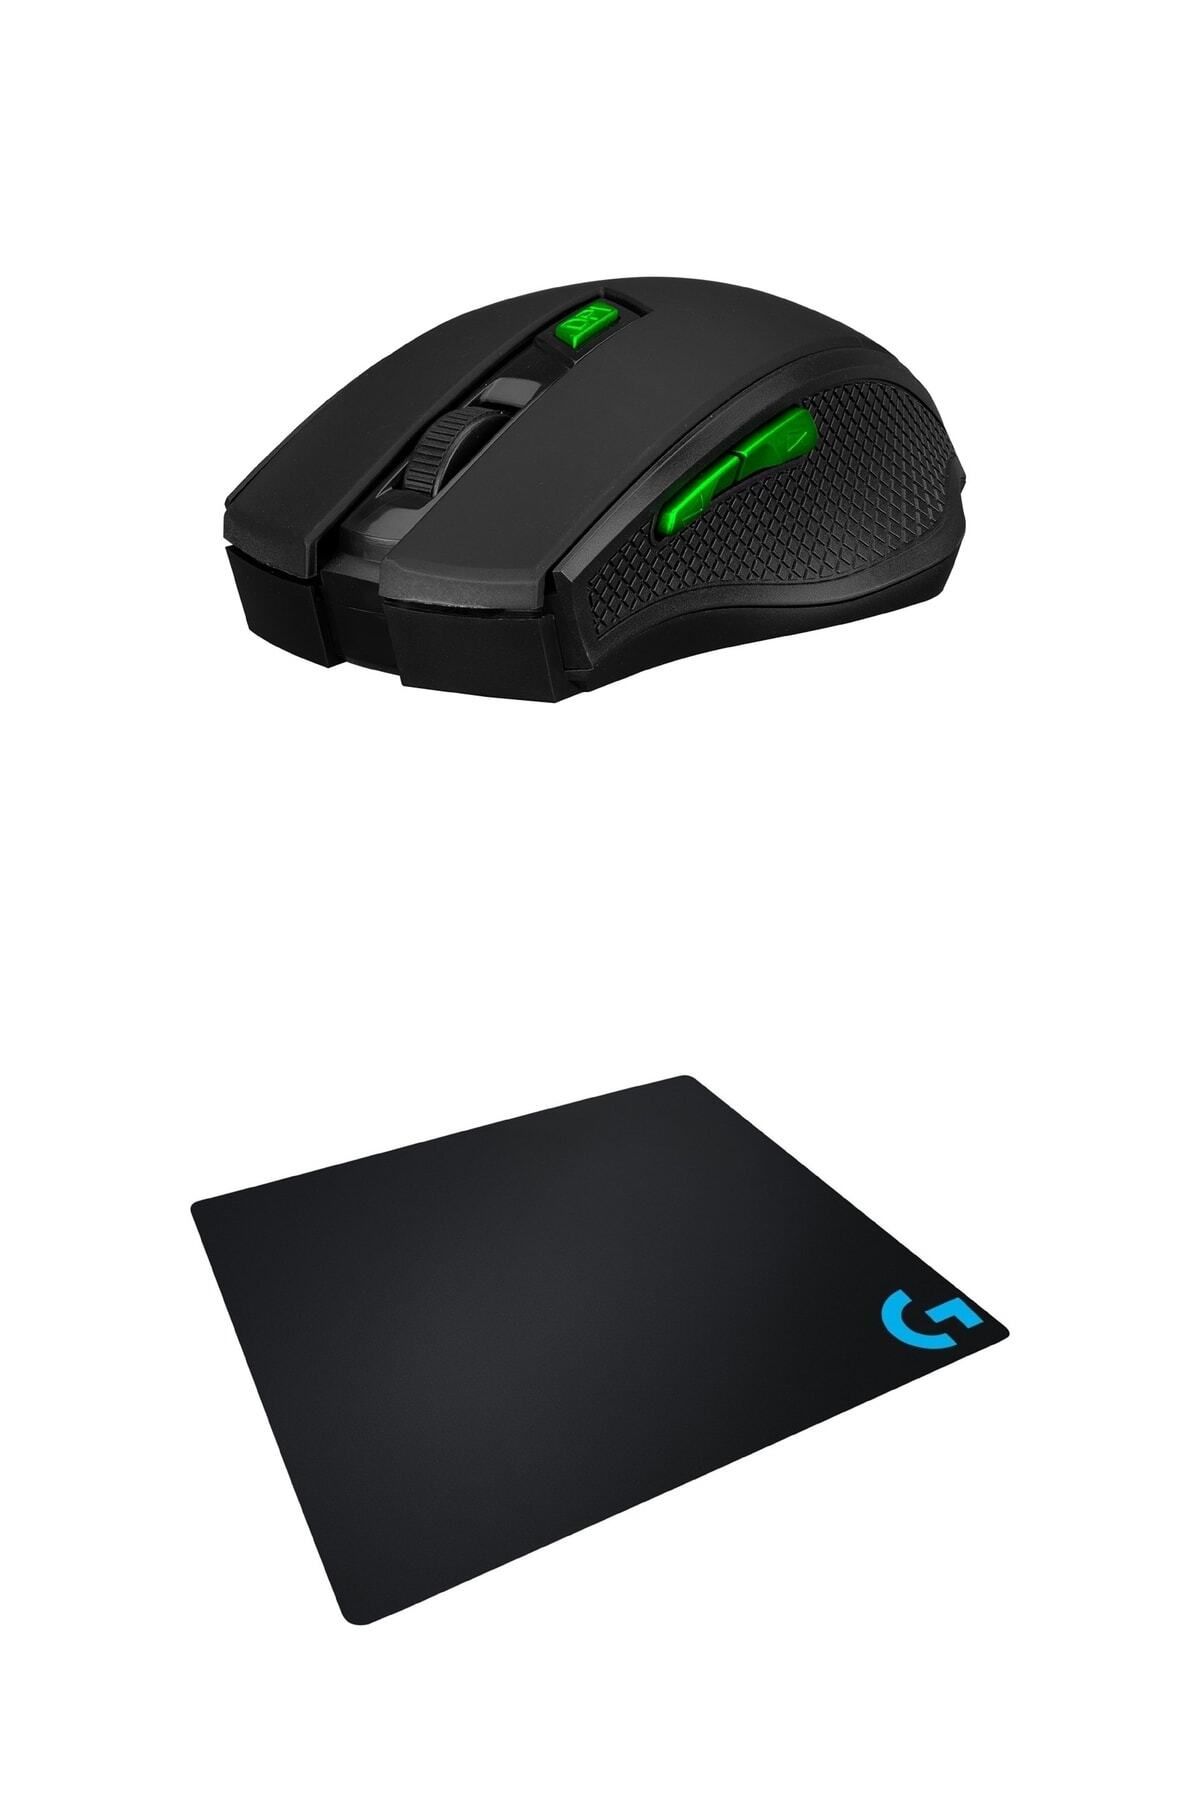 Everest Smw-777 Usb Siyah 2.4ghz Optik Wireless Mouse + Logitech Gaming Mouse Pad